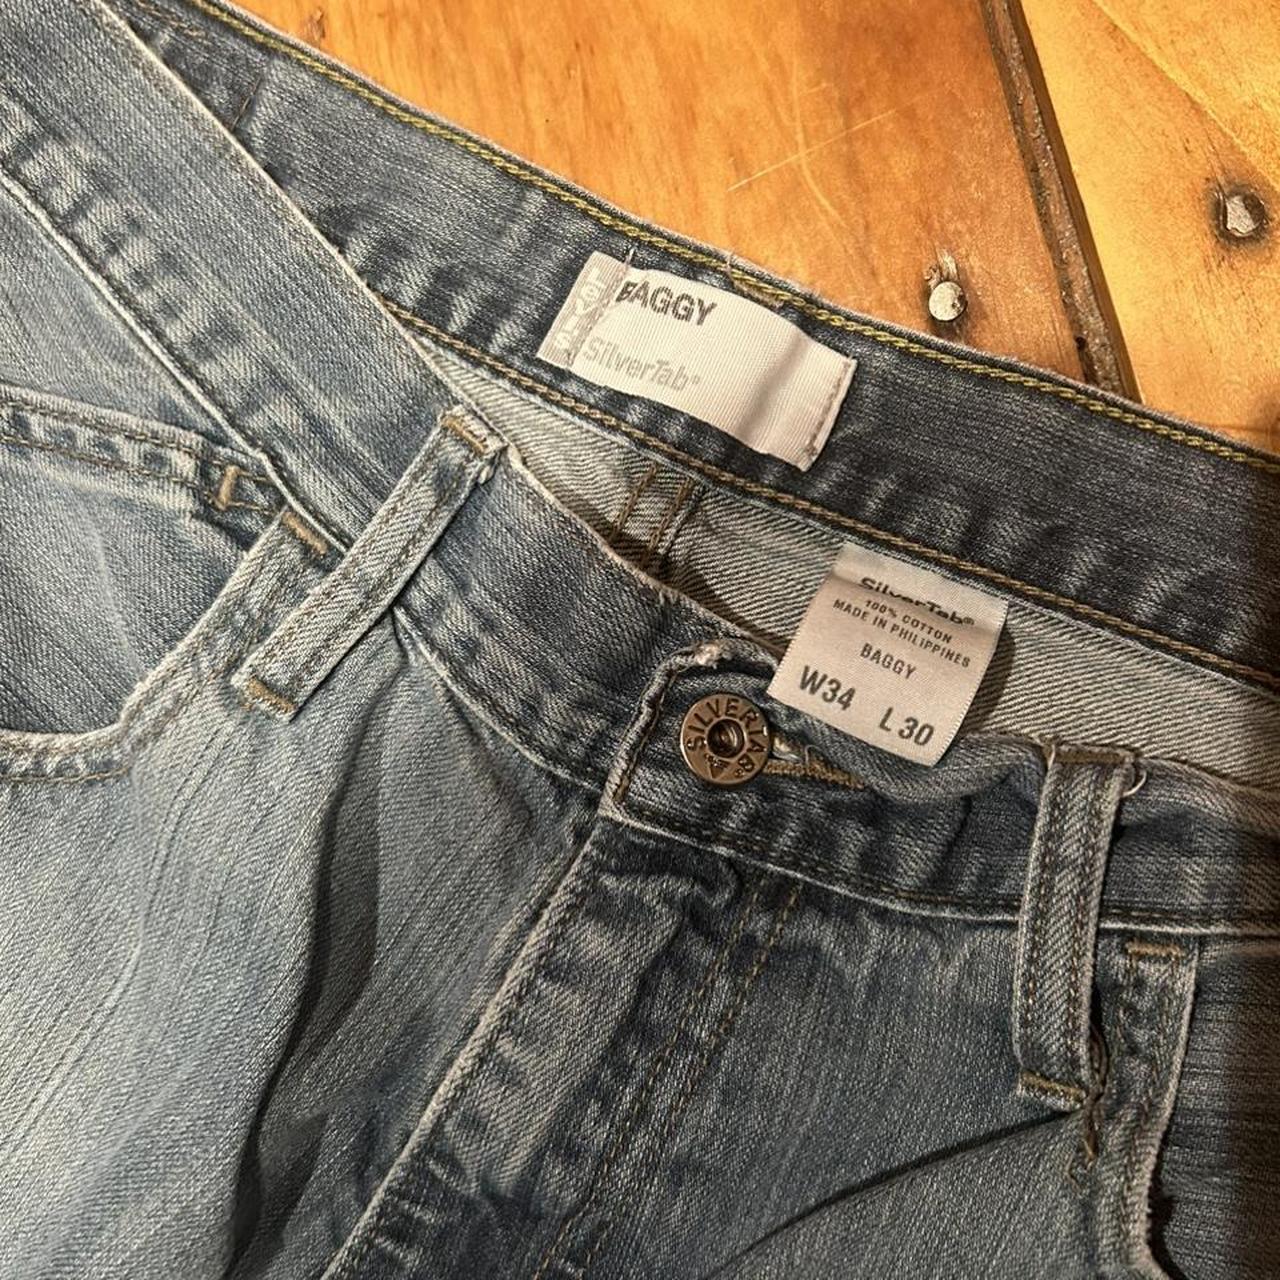 Levi’s SilverTab Baggy Fit Jeans 34x30 Great... - Depop